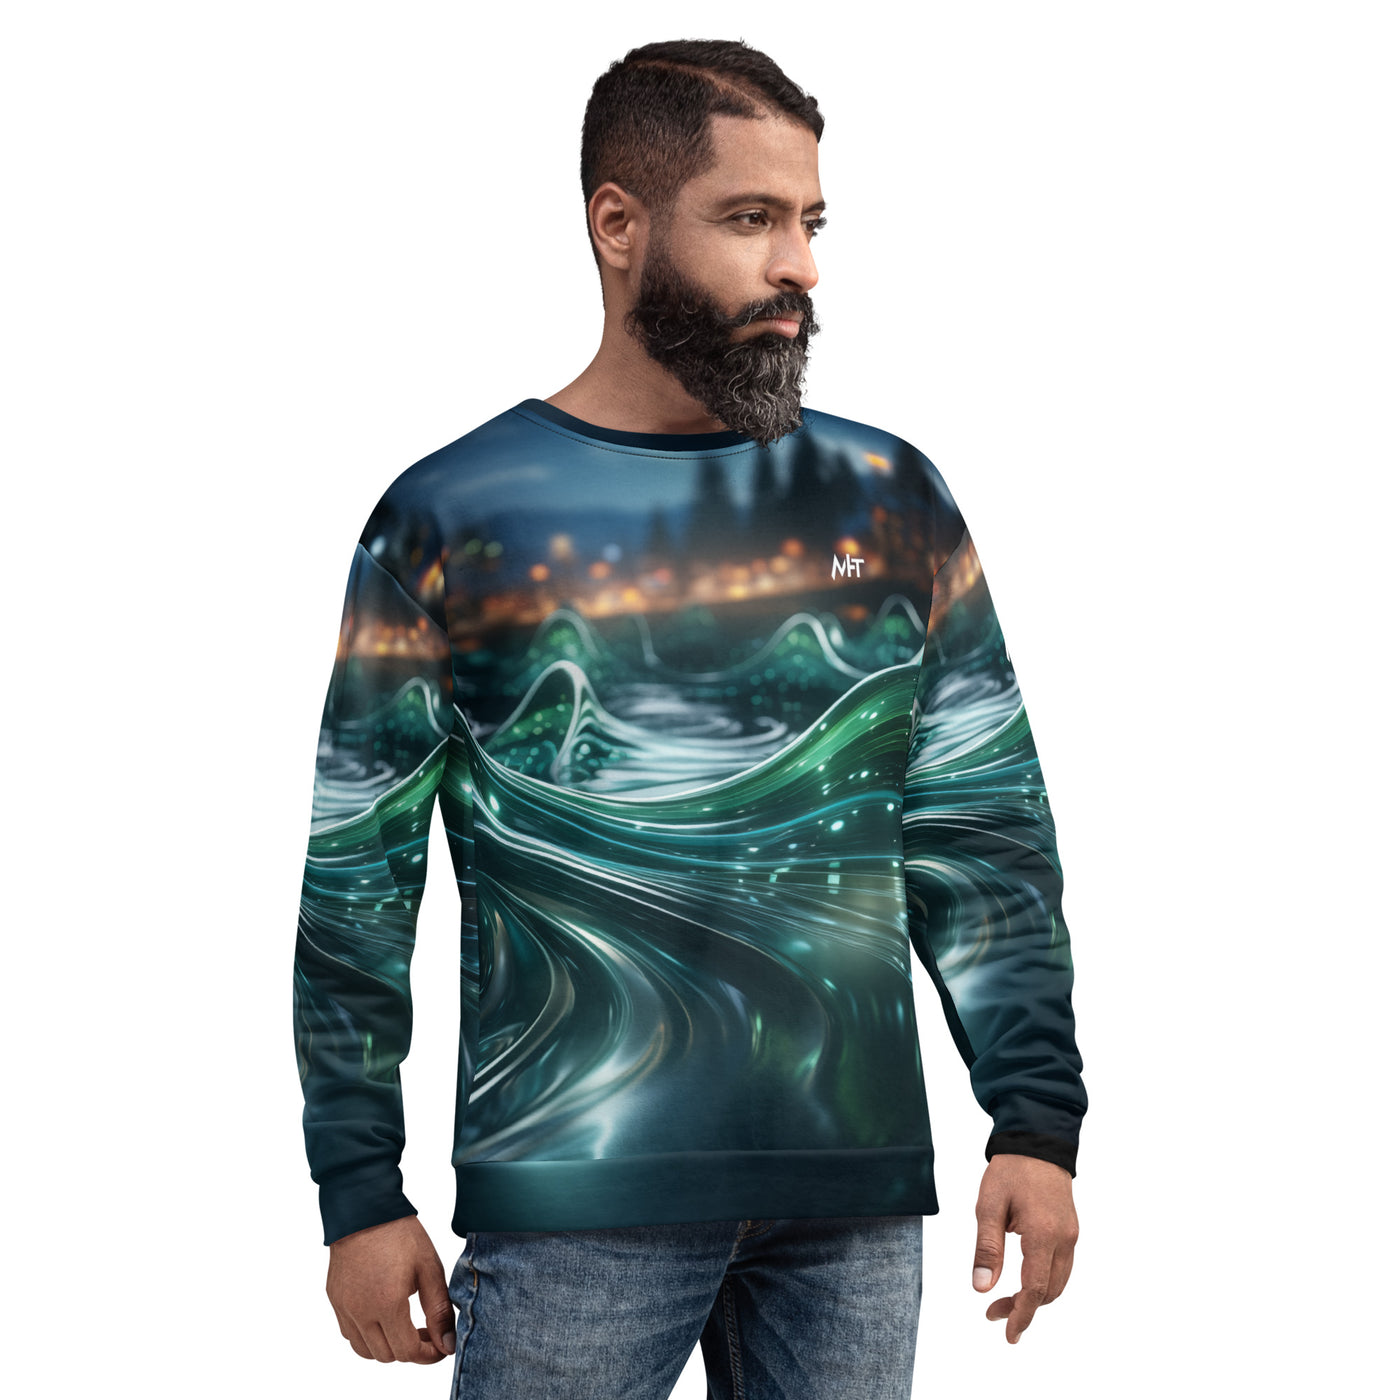 Neon AI V1 - Unisex Sweatshirt